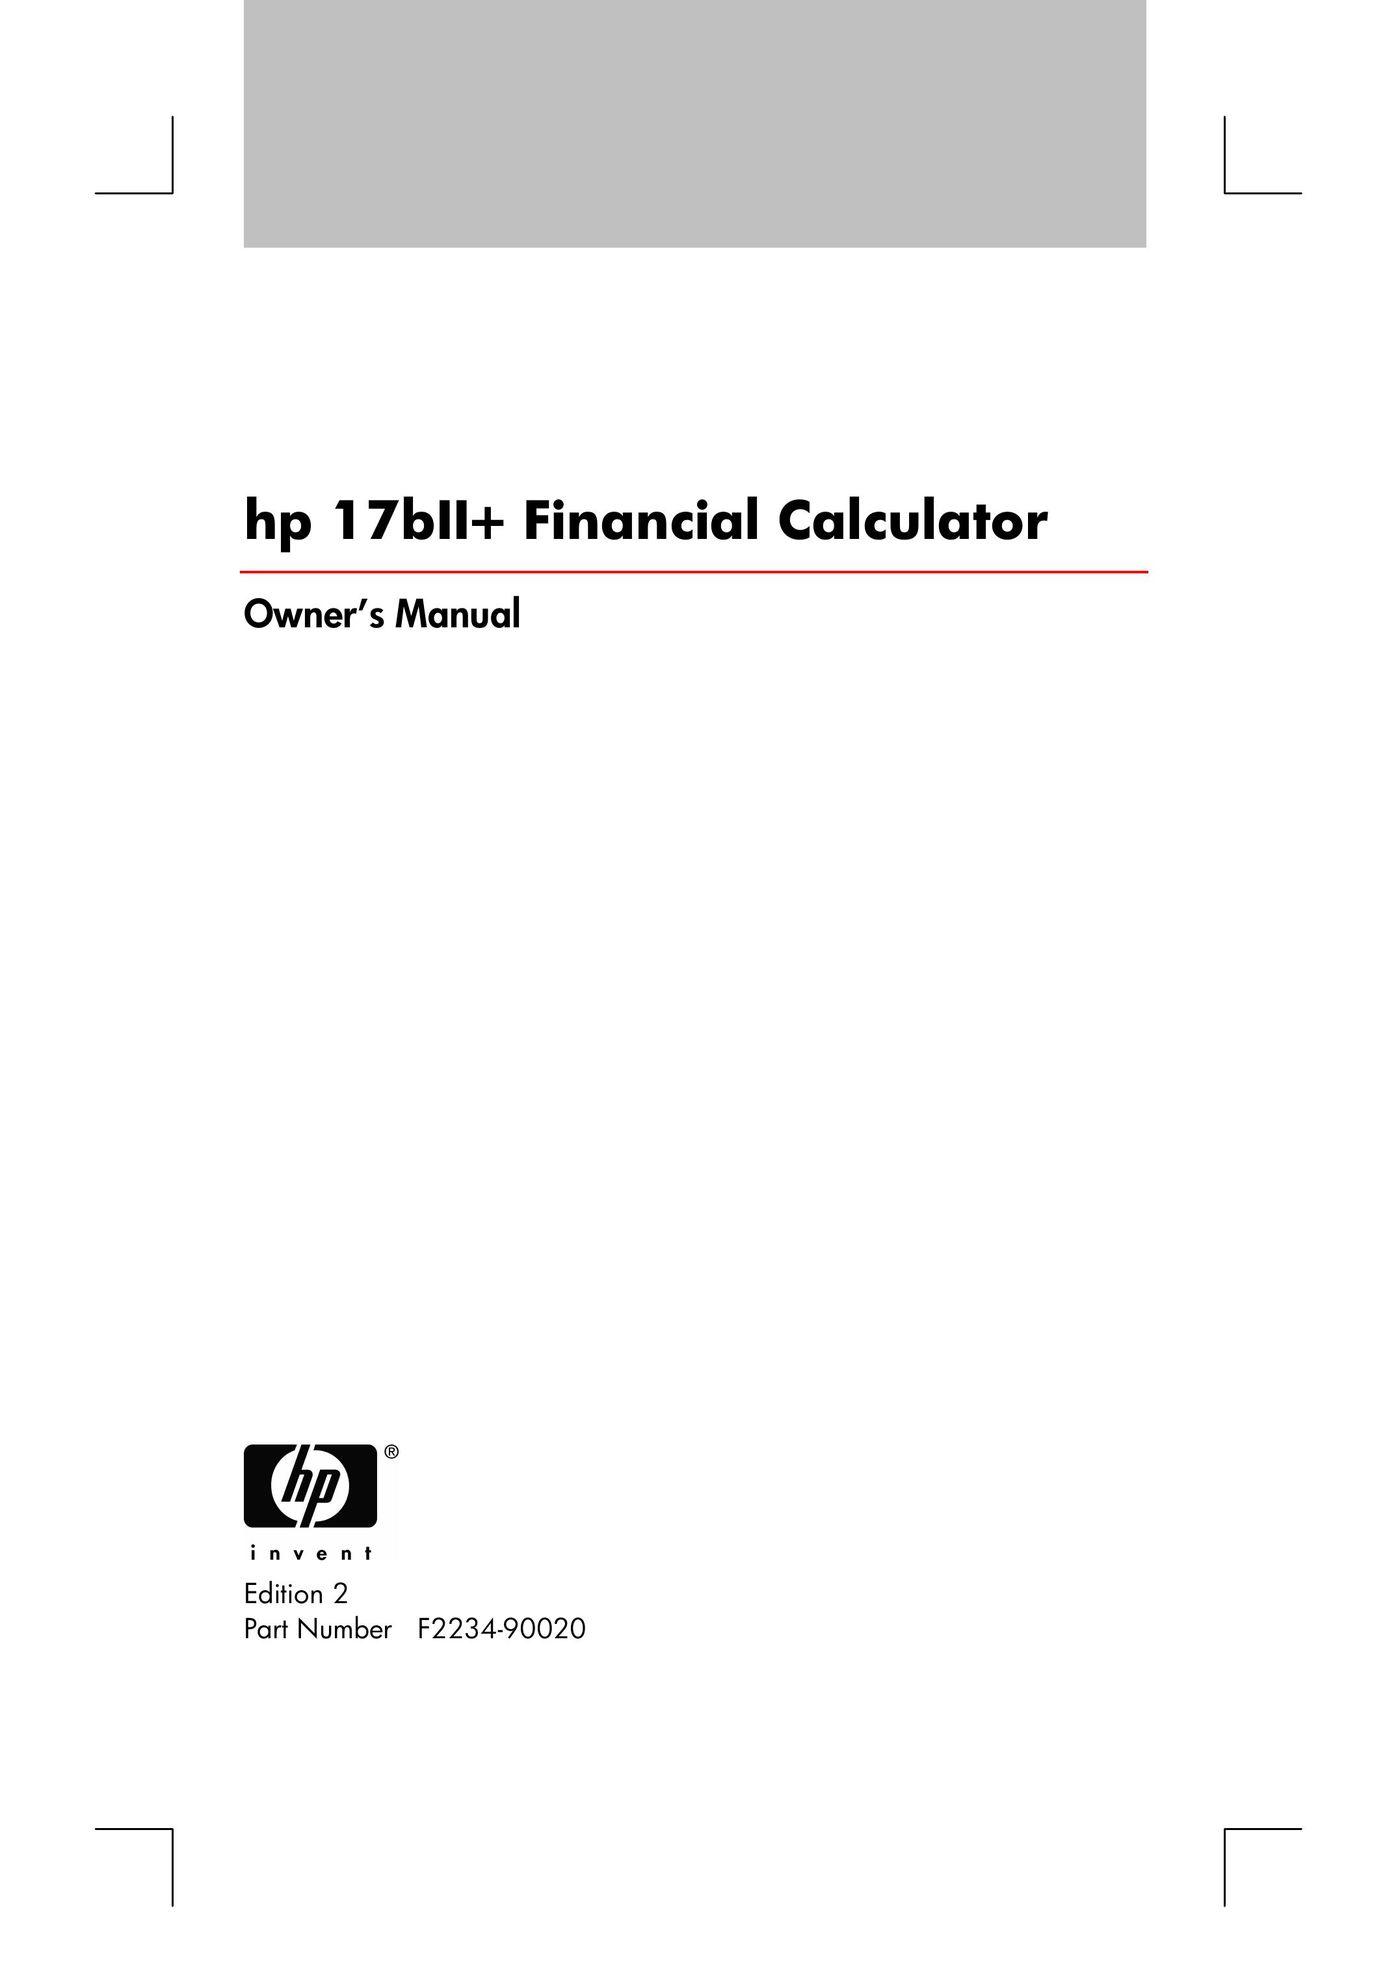 HP (Hewlett-Packard) 17bII Calculator User Manual